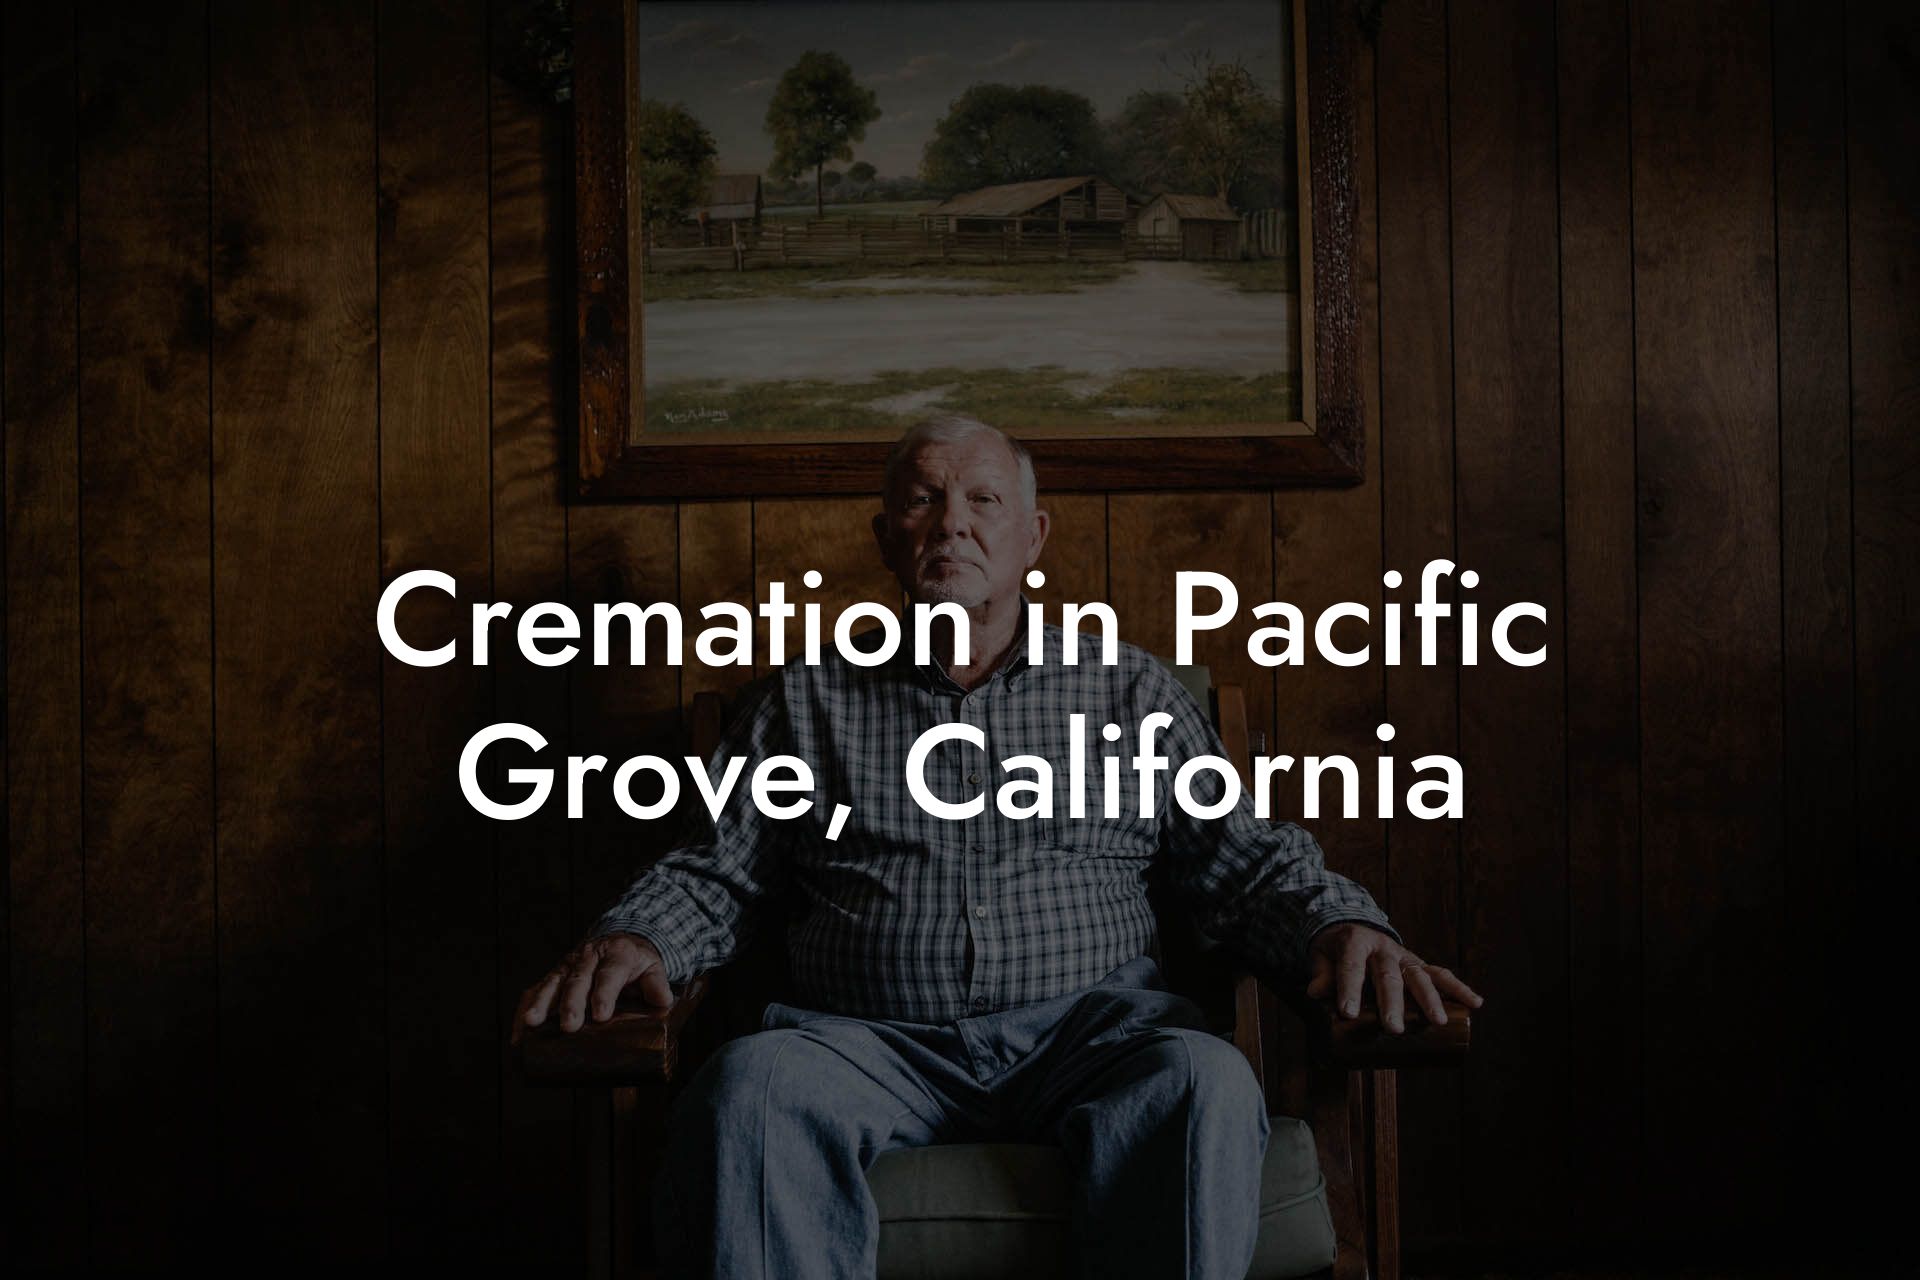 Cremation in Pacific Grove, California